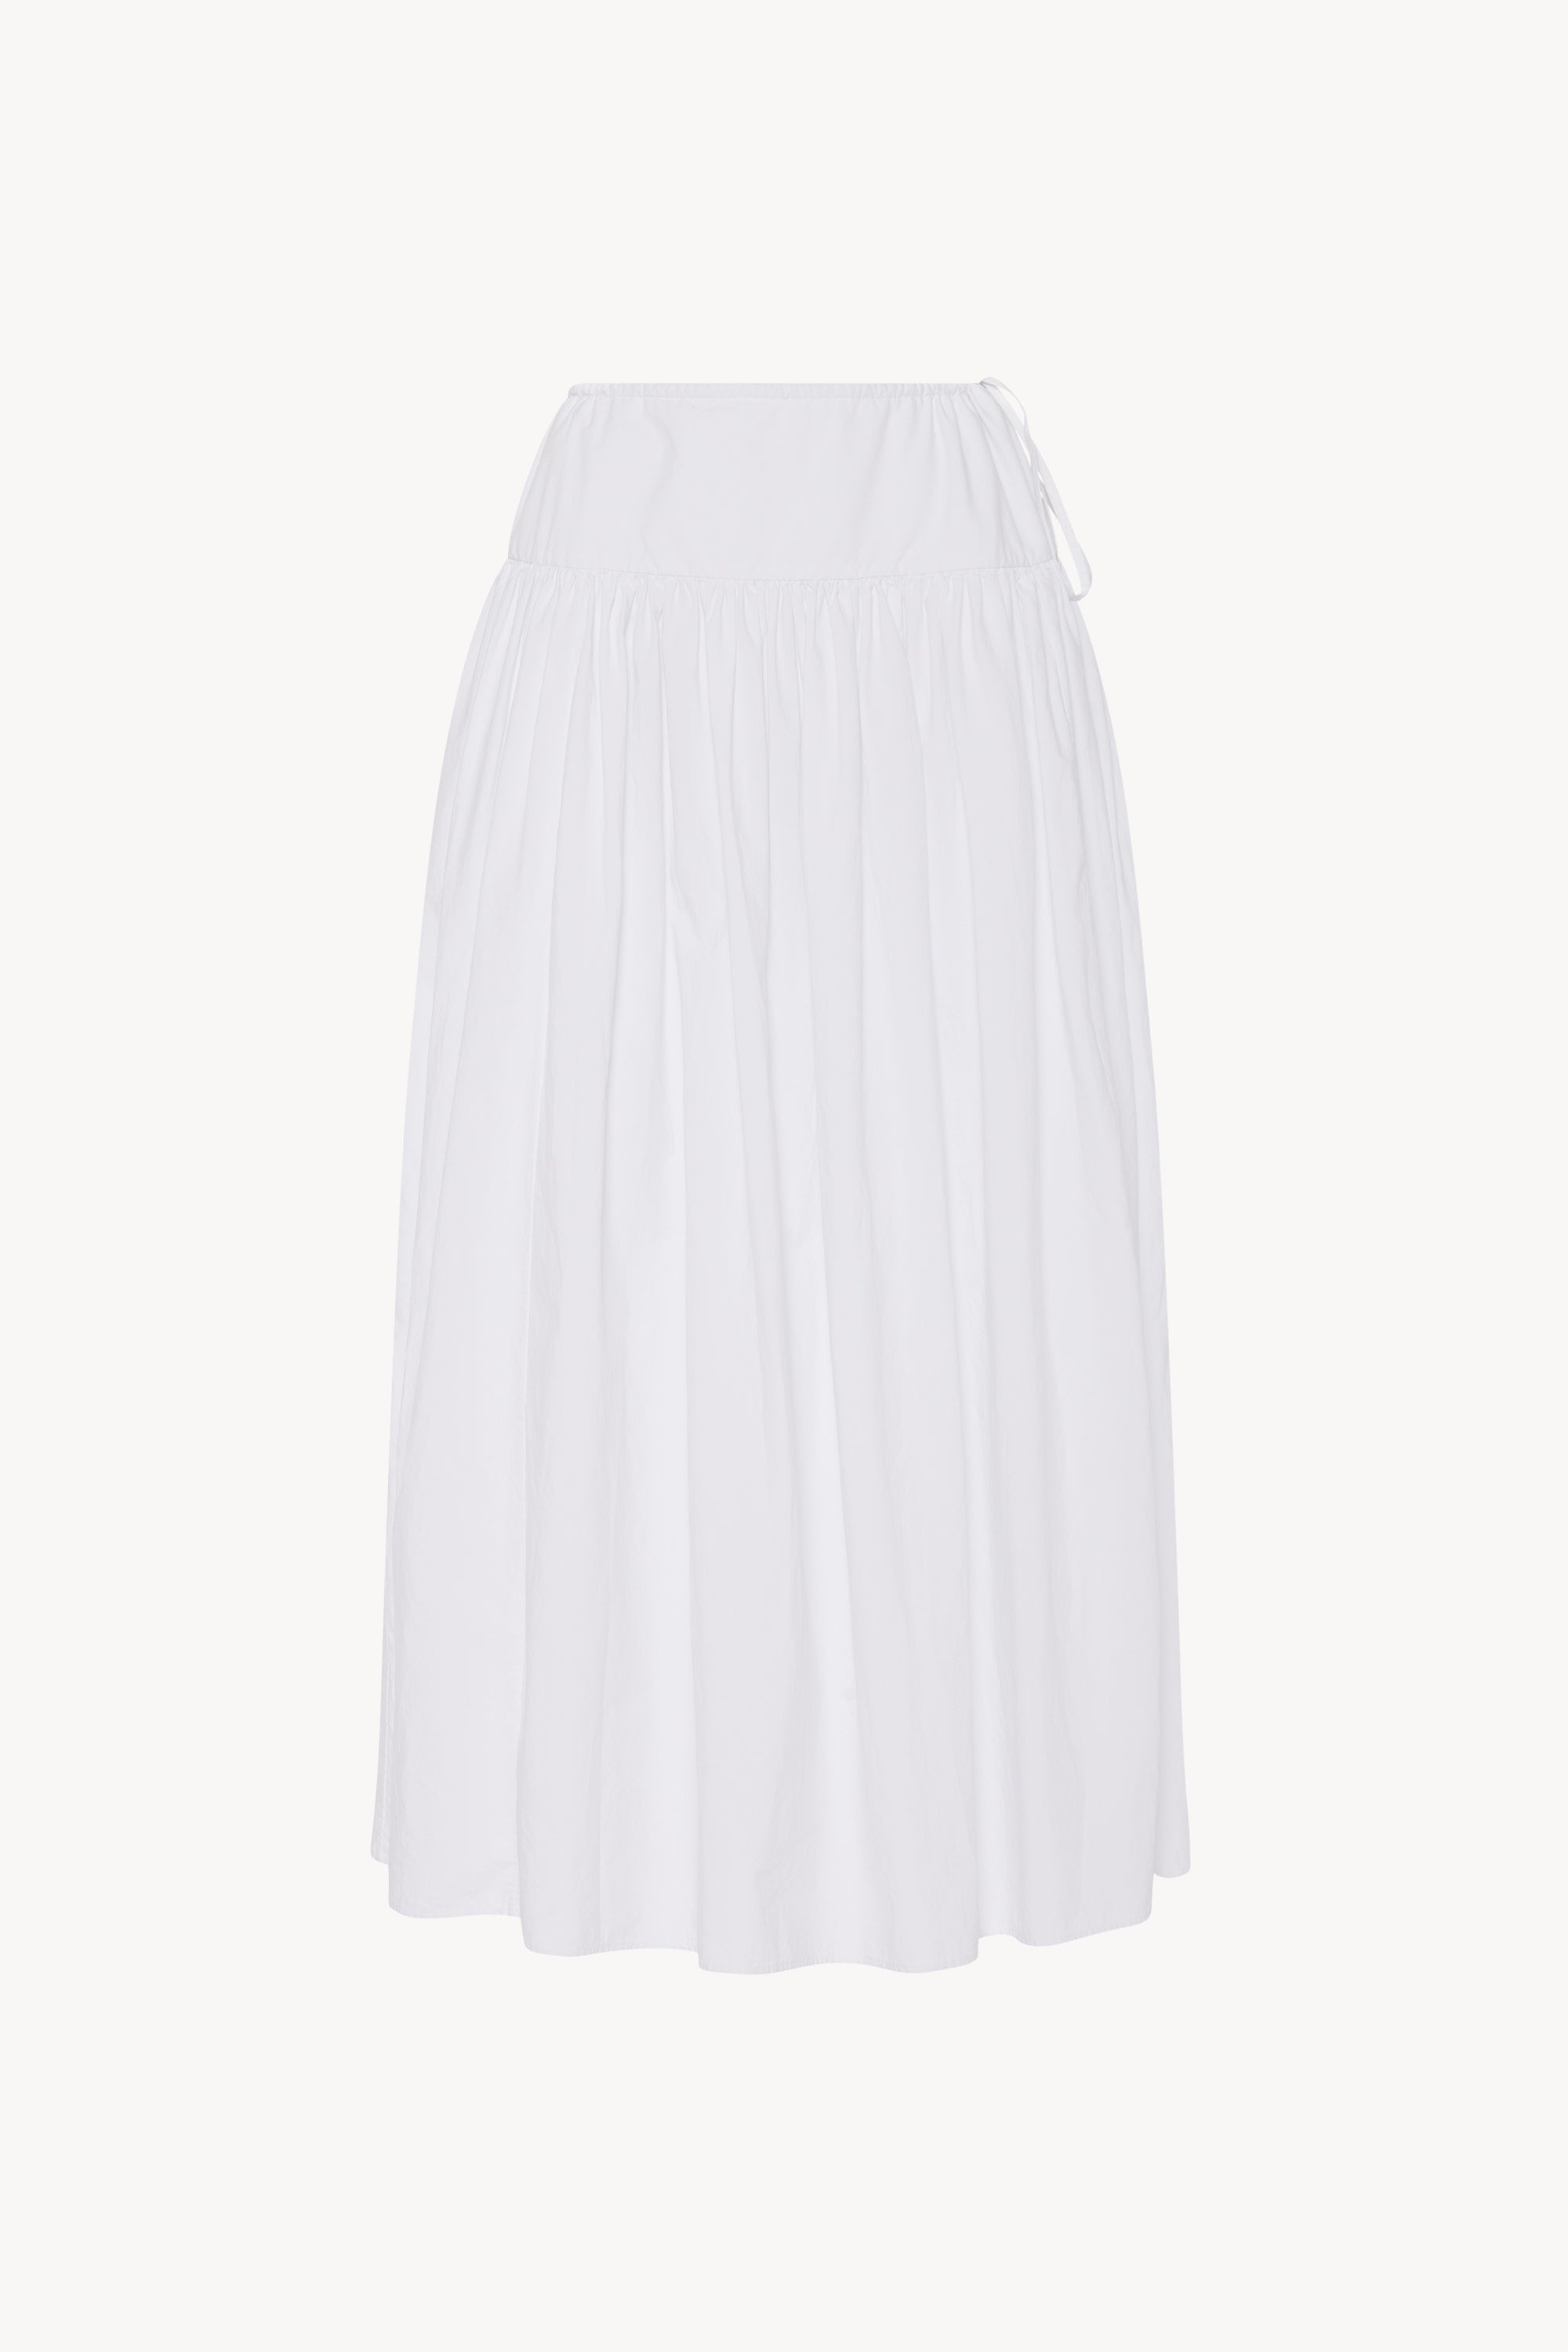 Leddie Skirt in Cotton - 1